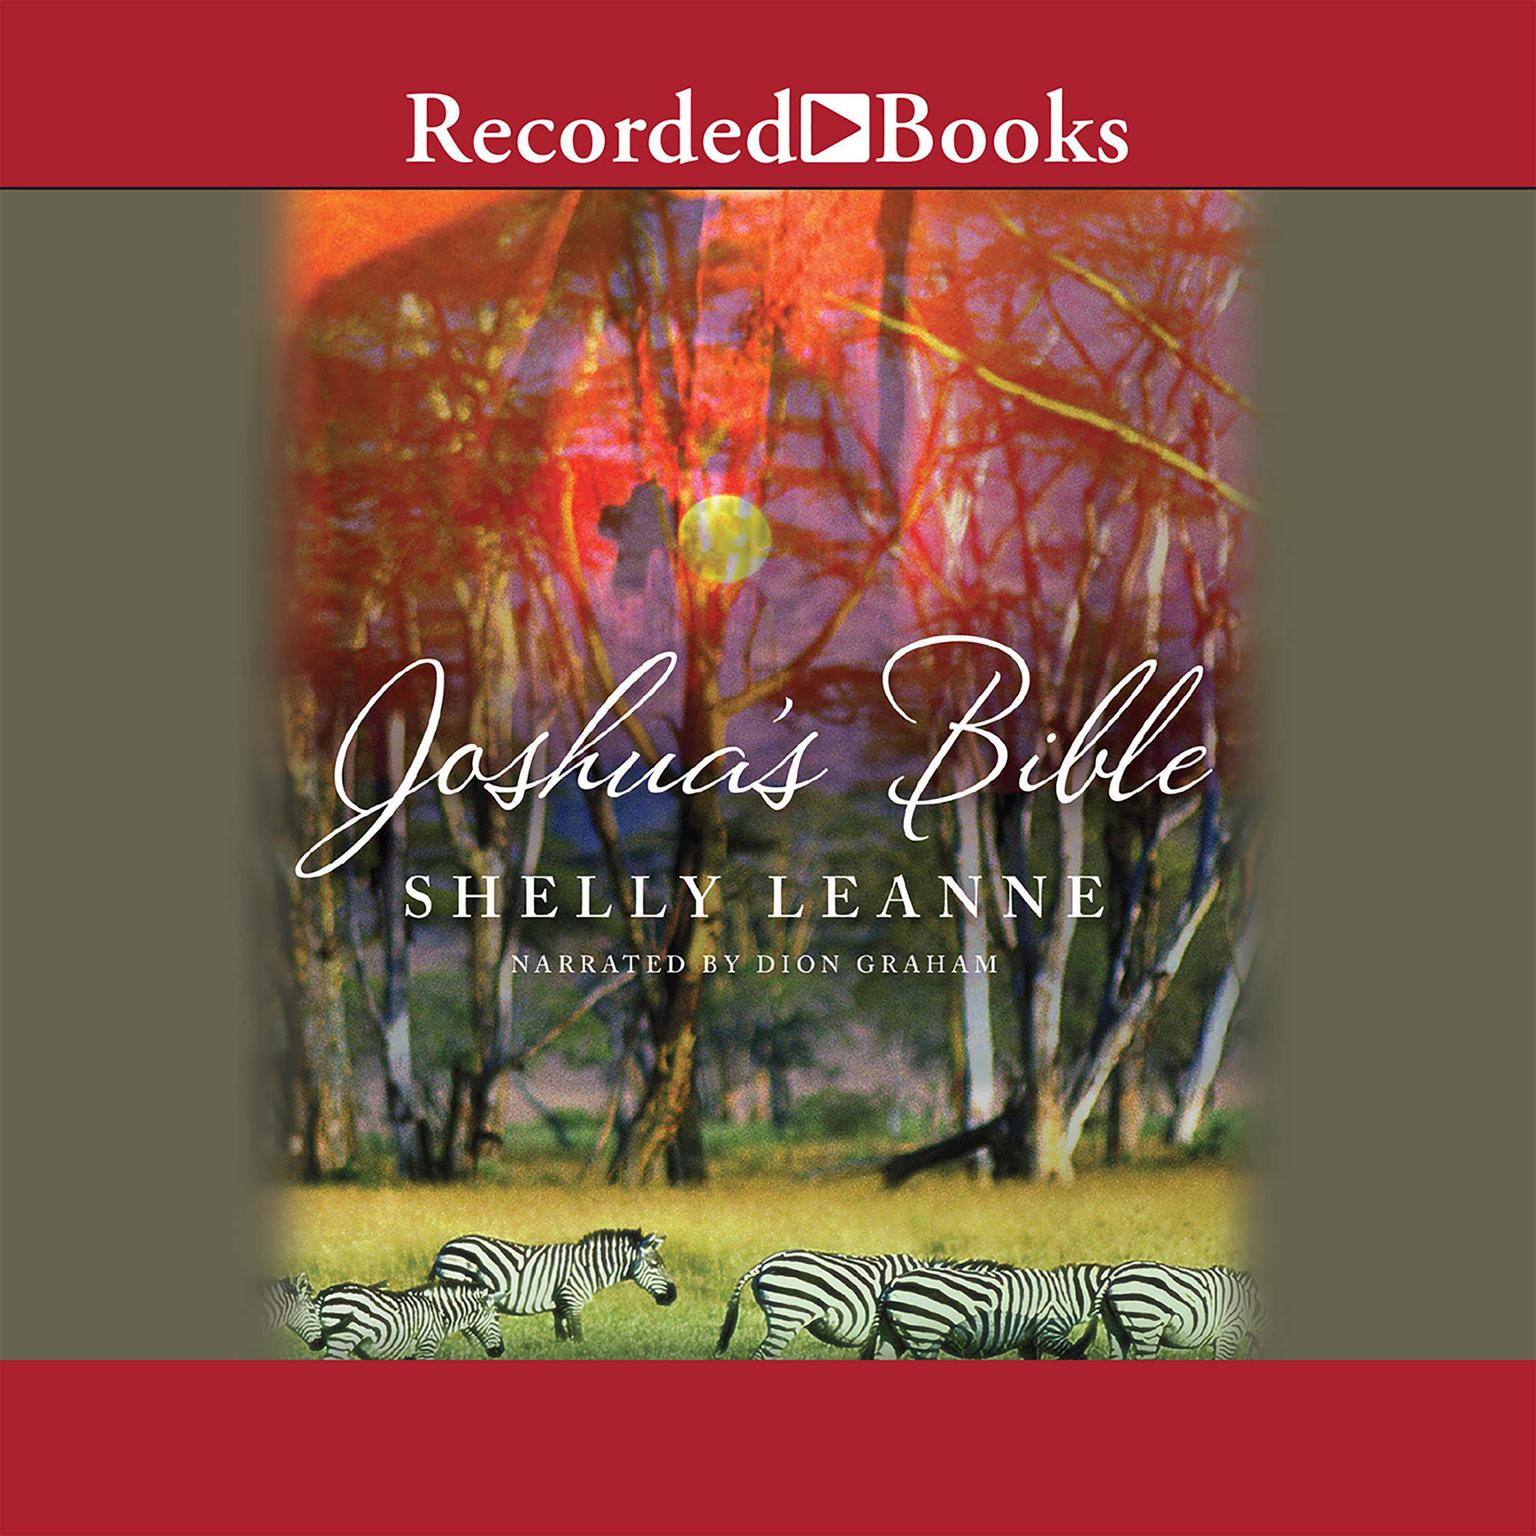 Joshuas Bible: A Novel Audiobook, by Shelly Leanne